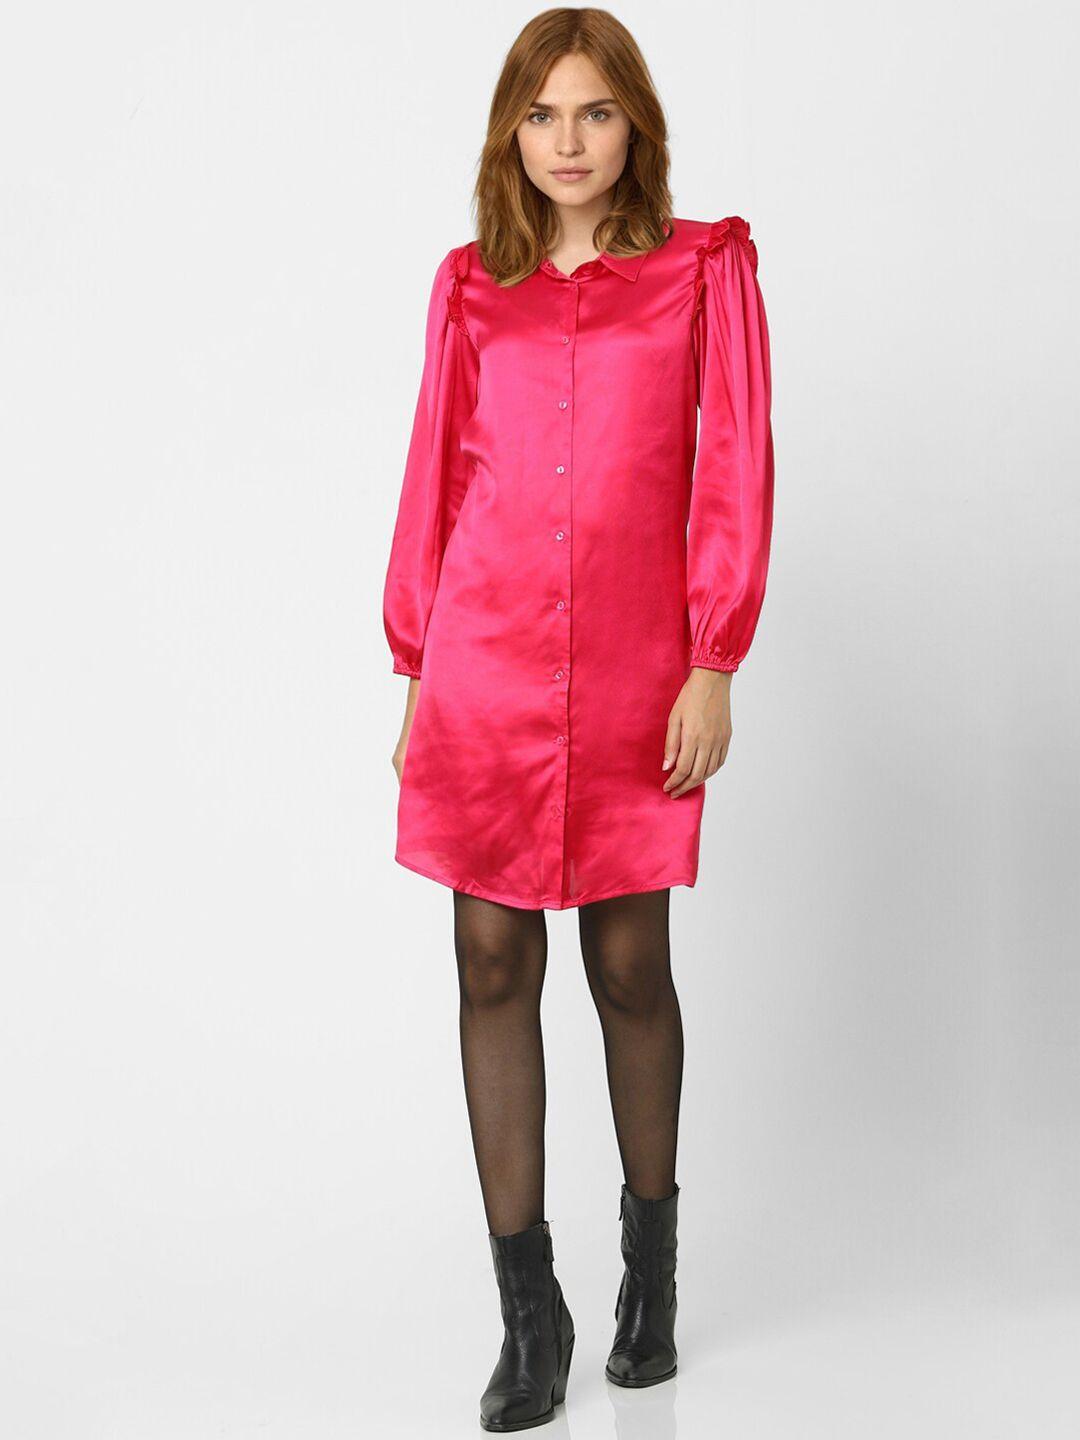 vero-moda-pink-shirt-dress